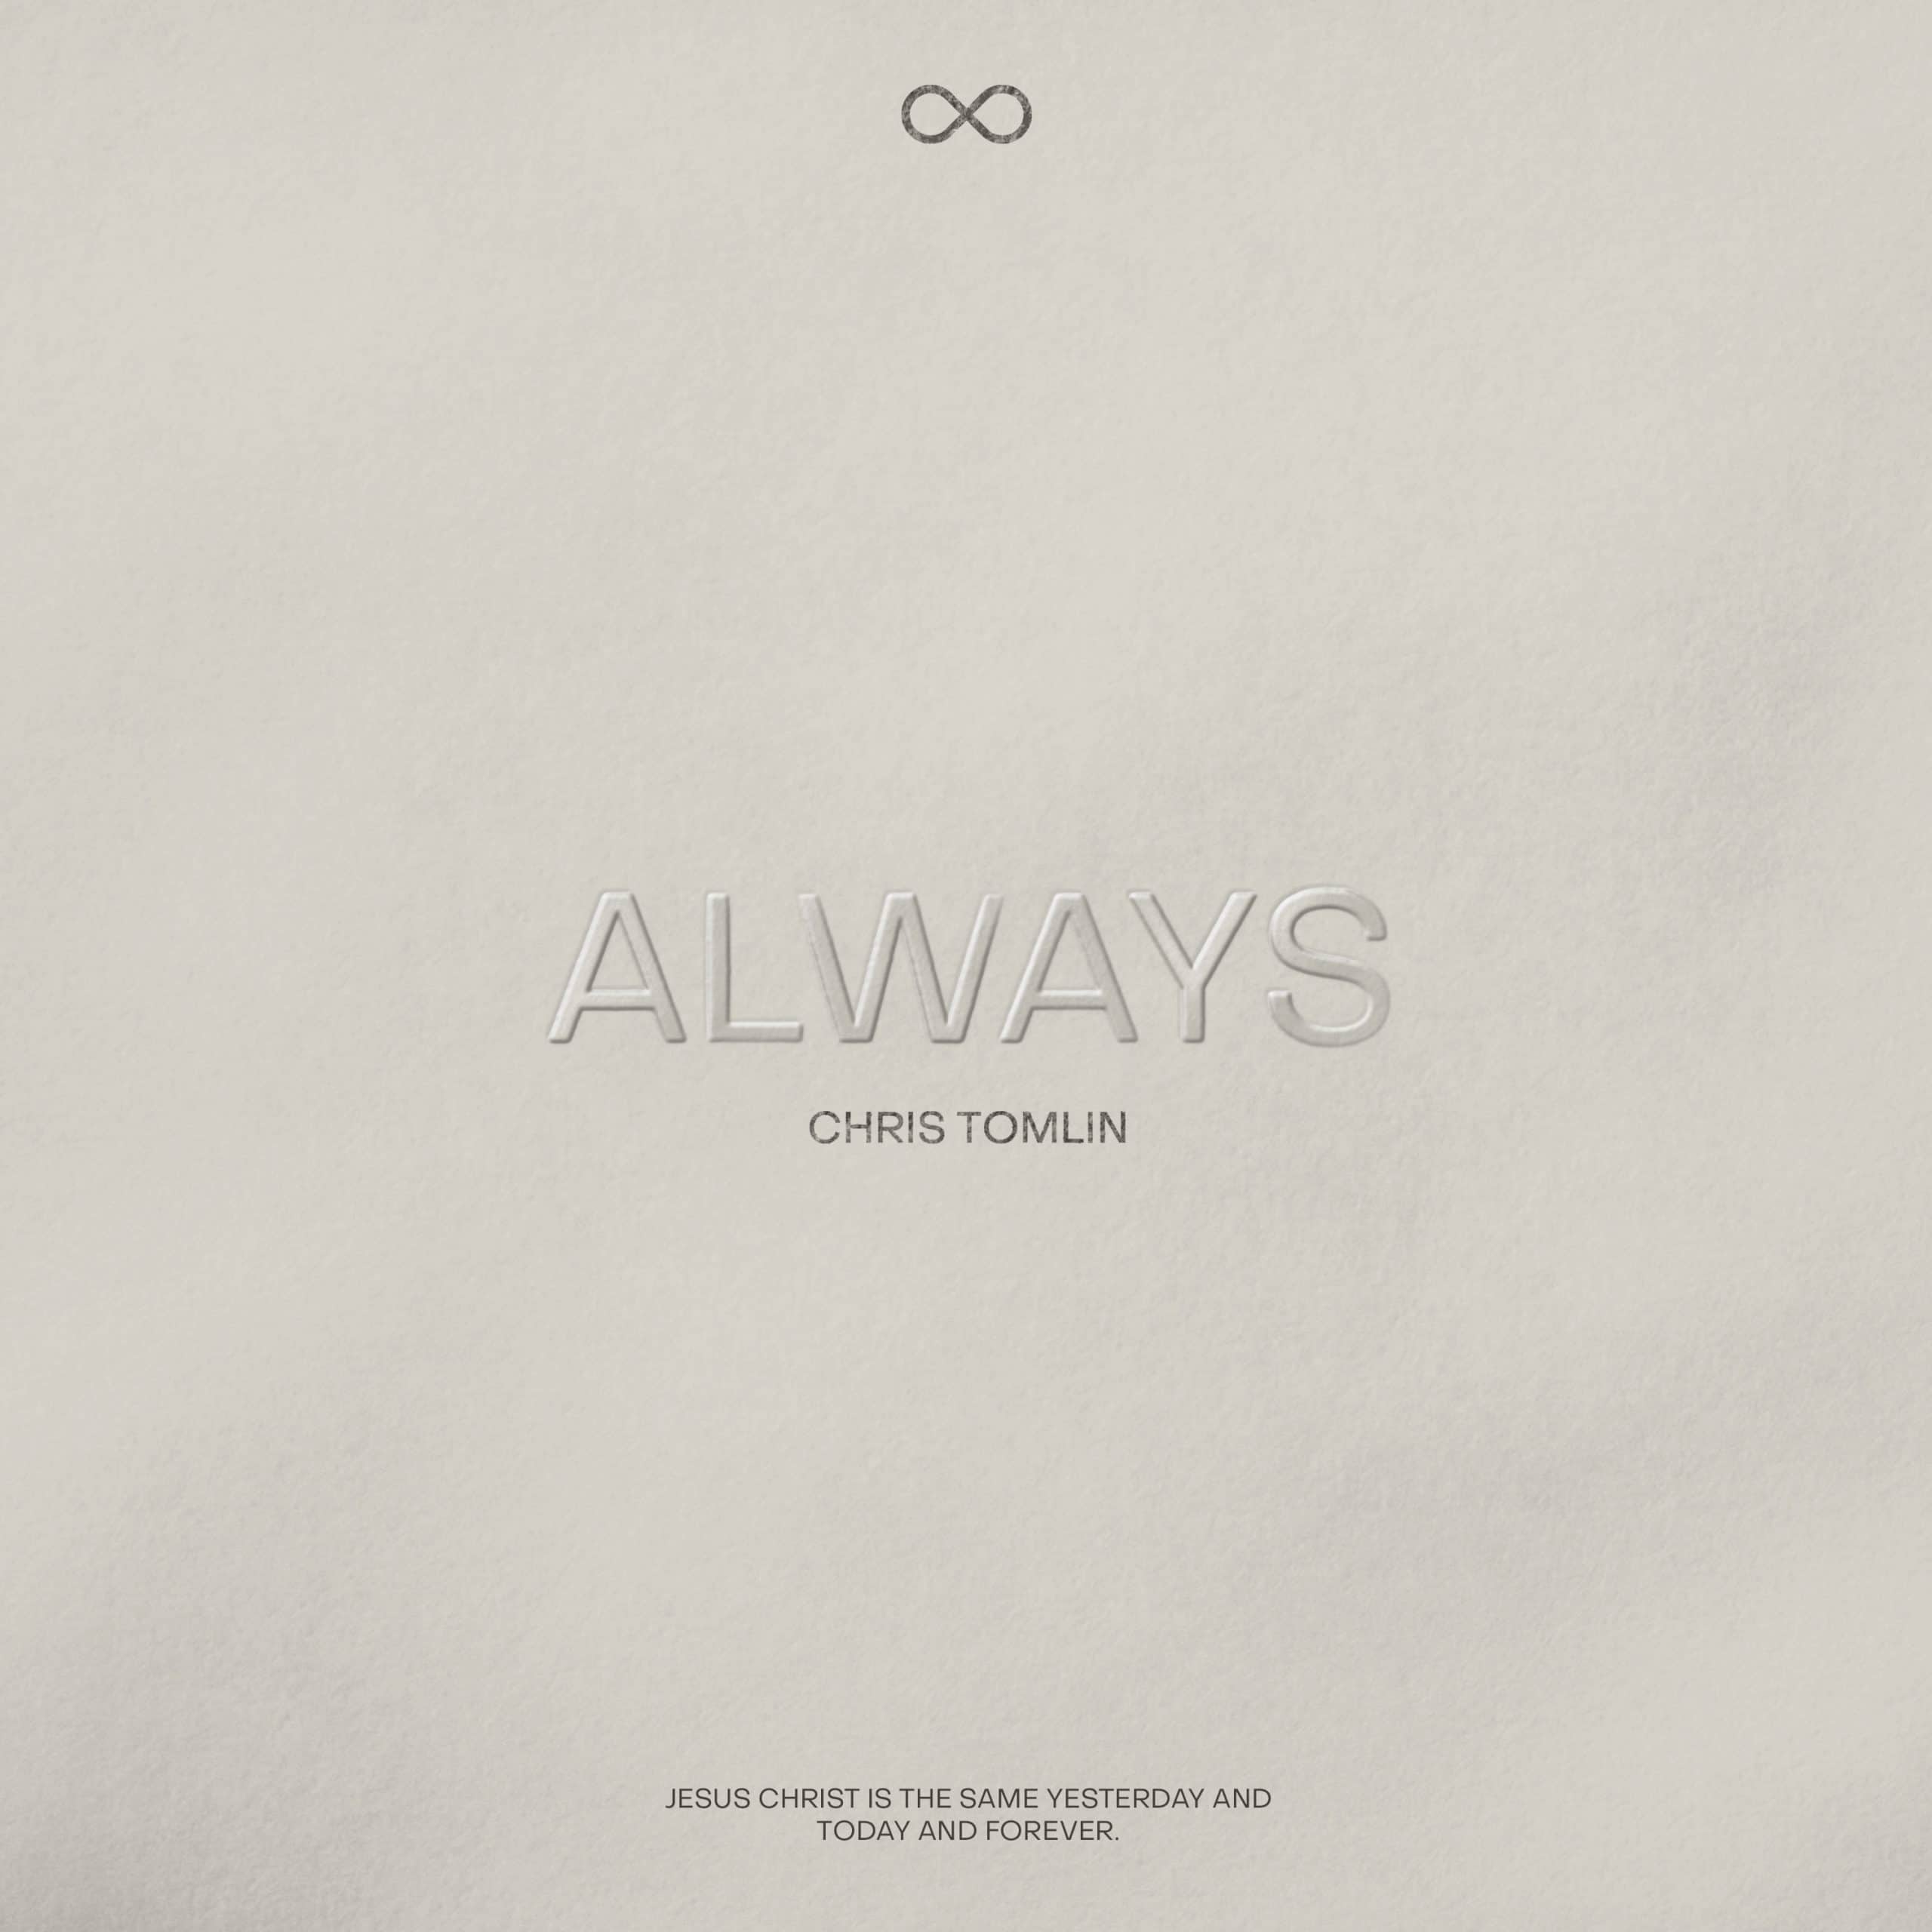 Chris Tomlin "Always" cover